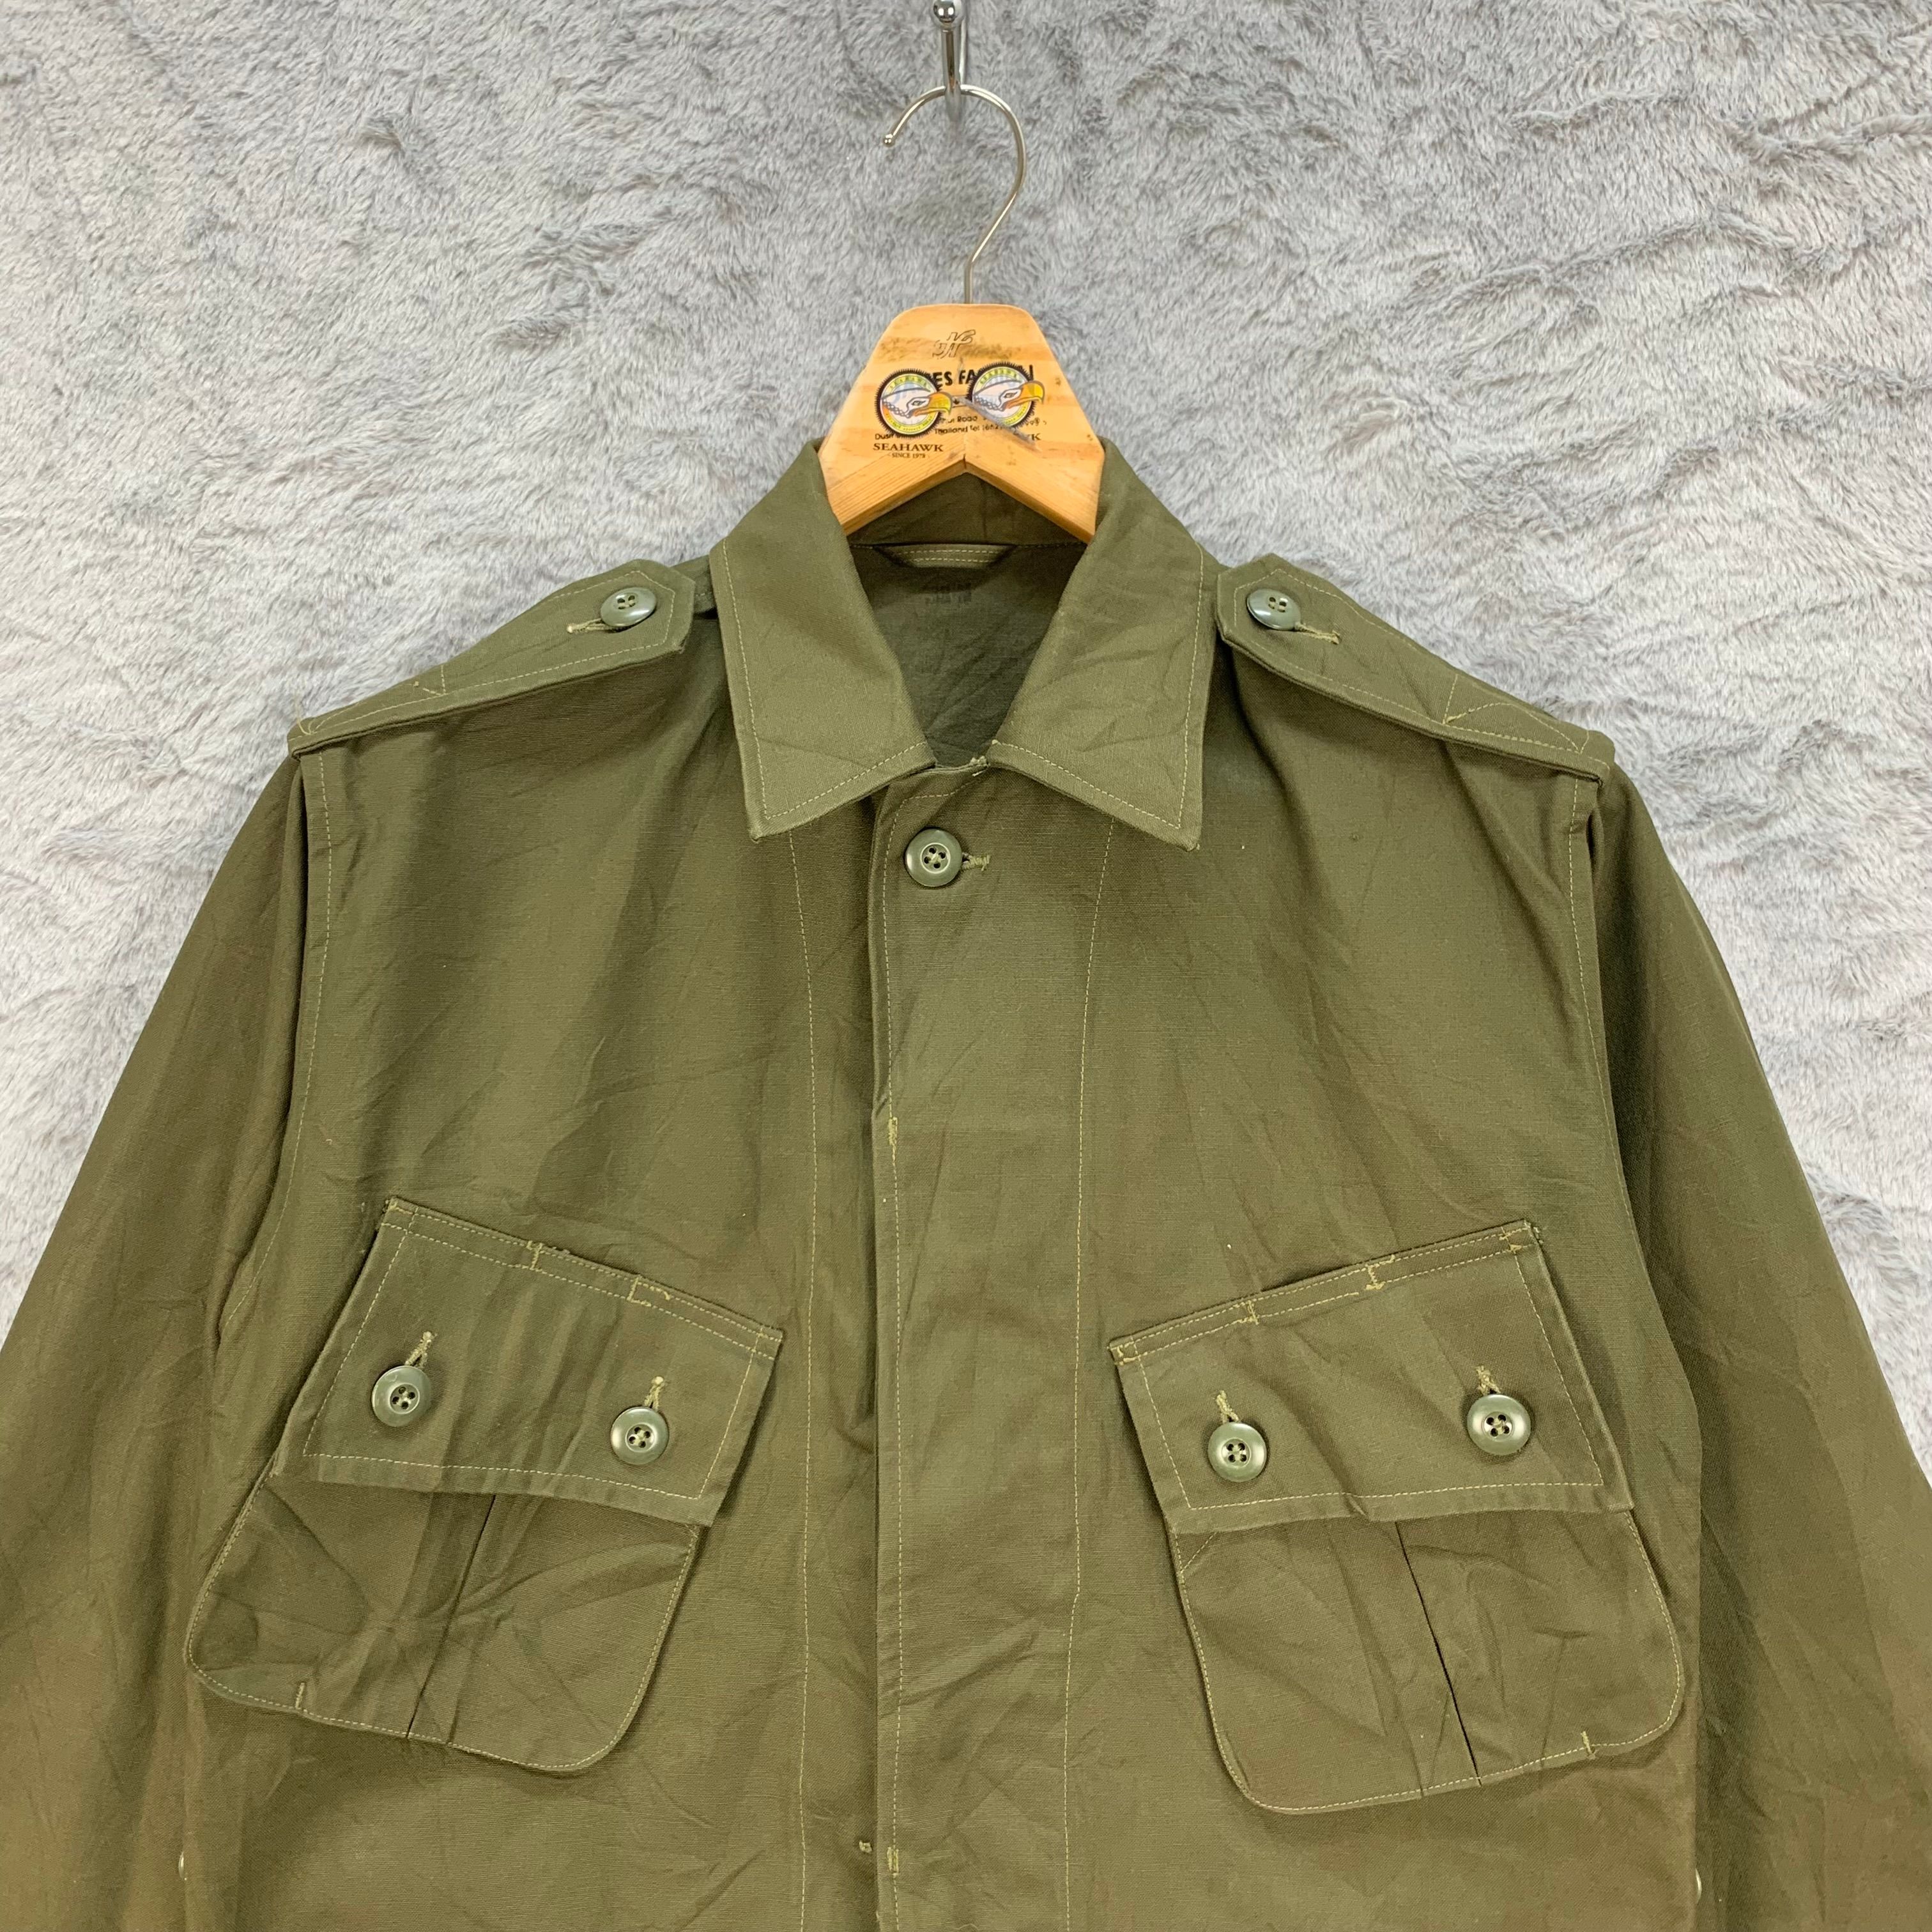 Vintage - Army Uniform Military Field Jacket / Chore Jacket #4400-152 - 2